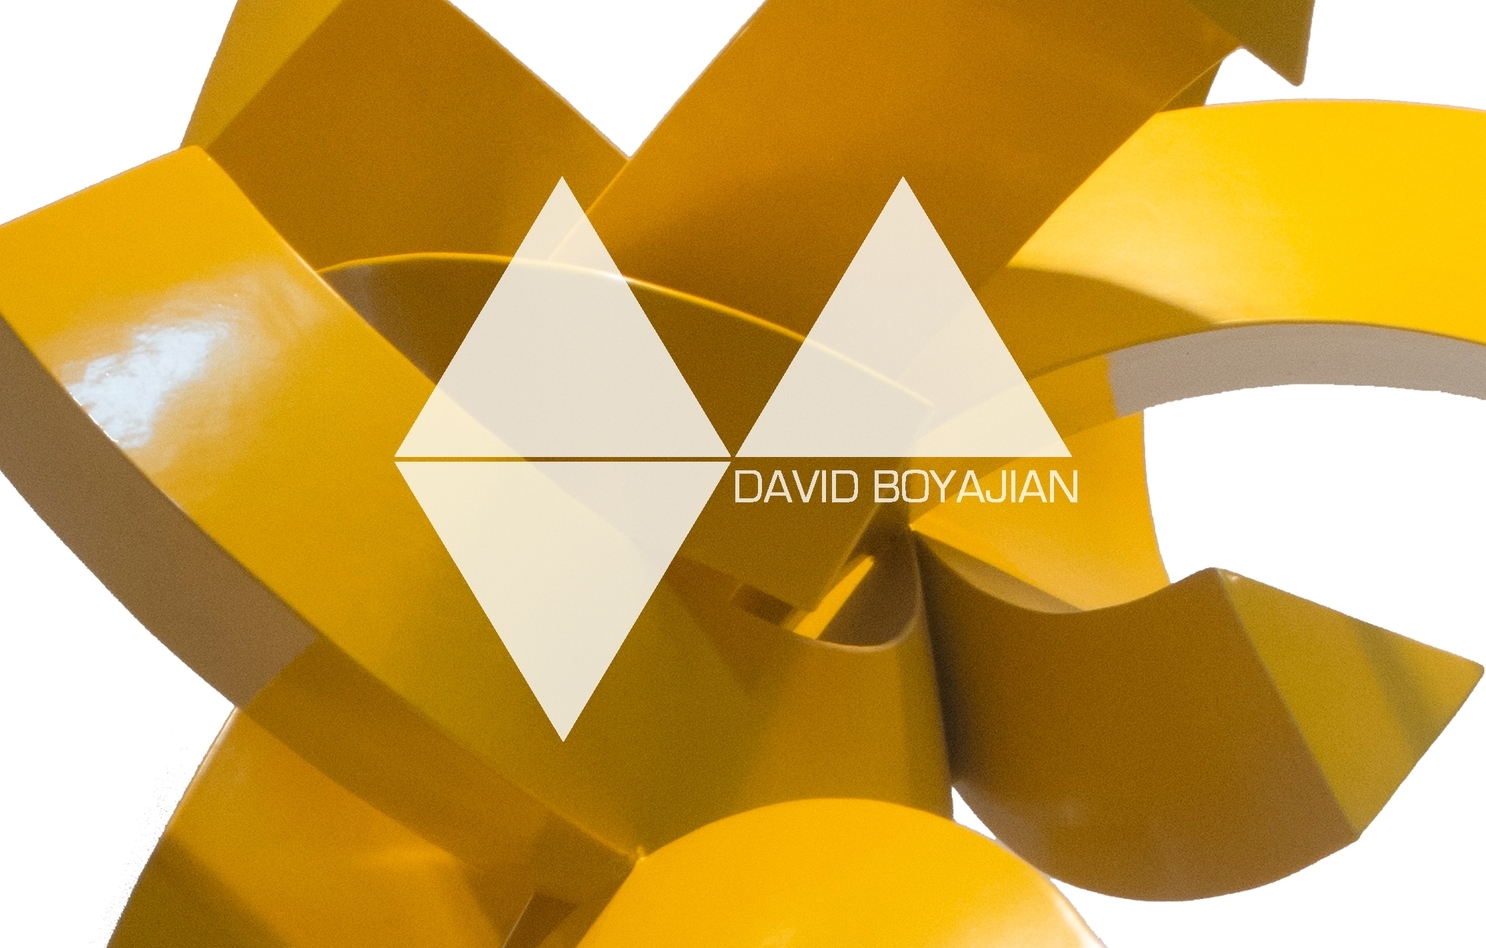 DAVID BOYAJIAN COVER 3.jpg